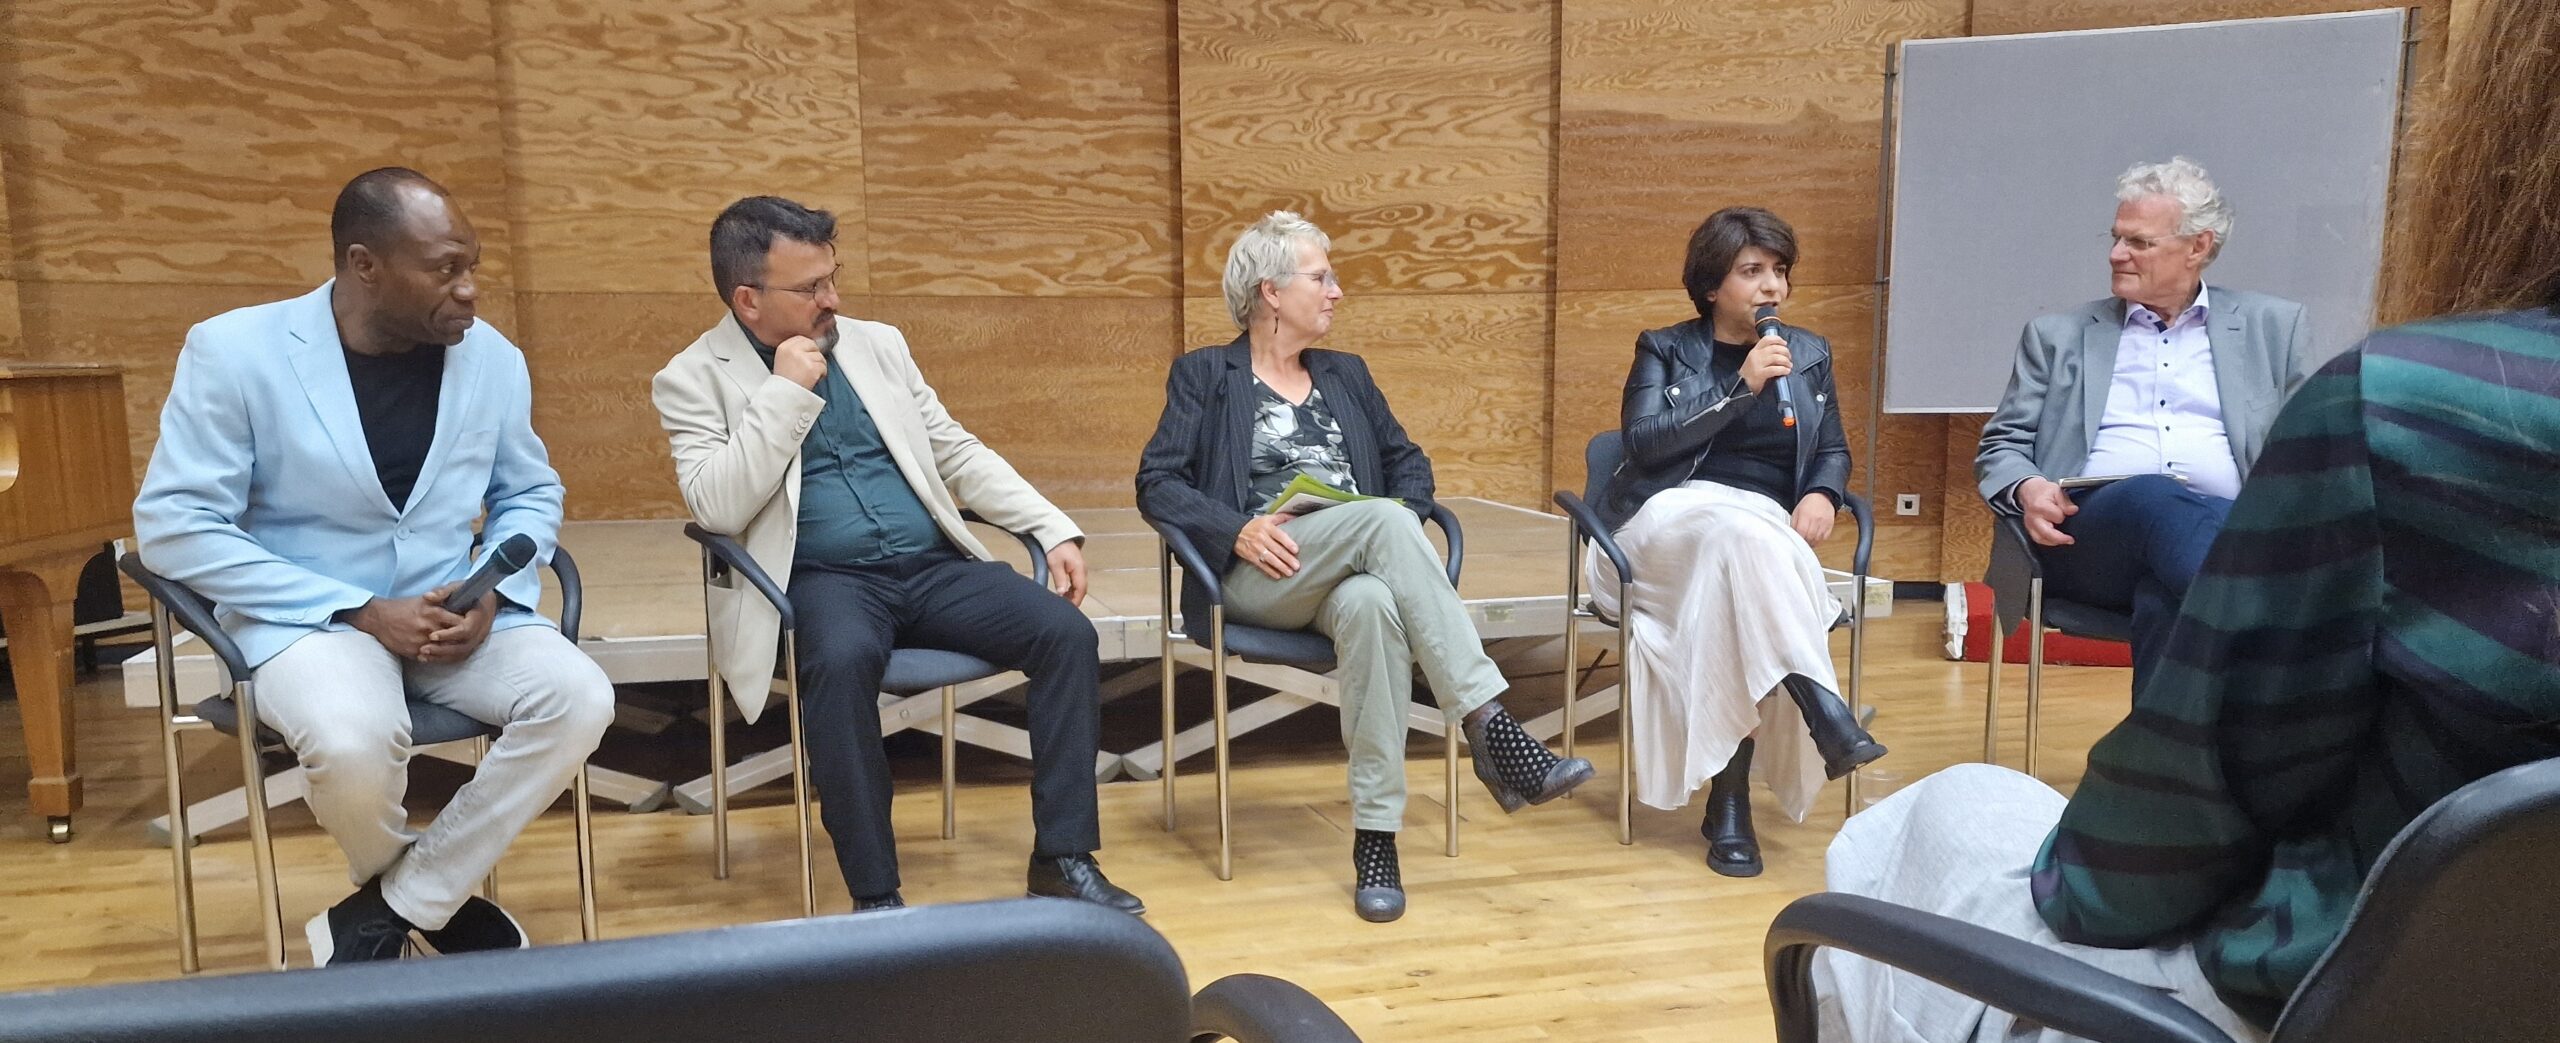 Foto vom Podium: Dr. John Akude Mdr, Inan Göpkinar (stv. Bezirksbürgermeister Chorweilser), Doris Dieckmann (VHS), Berivan Aymaz MdL, Dieter Schöffmann (KFA)